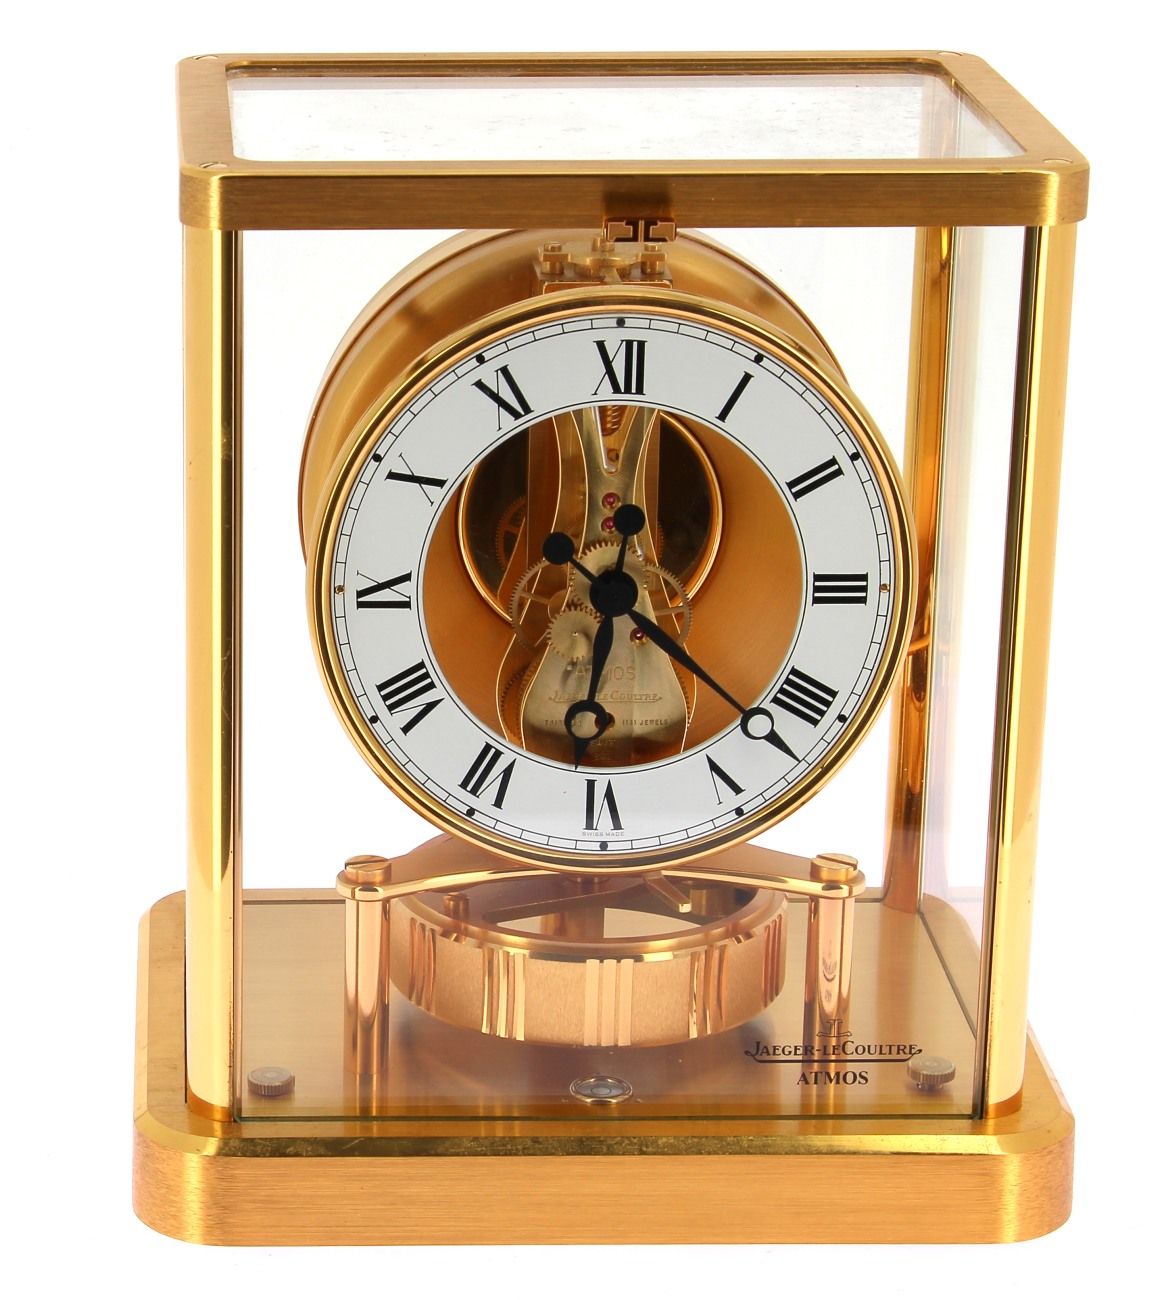 Null JAEGER-LECOULTRE - ATMOS - 镀金金属笼型时钟。尺寸：高 22.5 x 宽 20 x 深 15.5 厘米。约 80 年